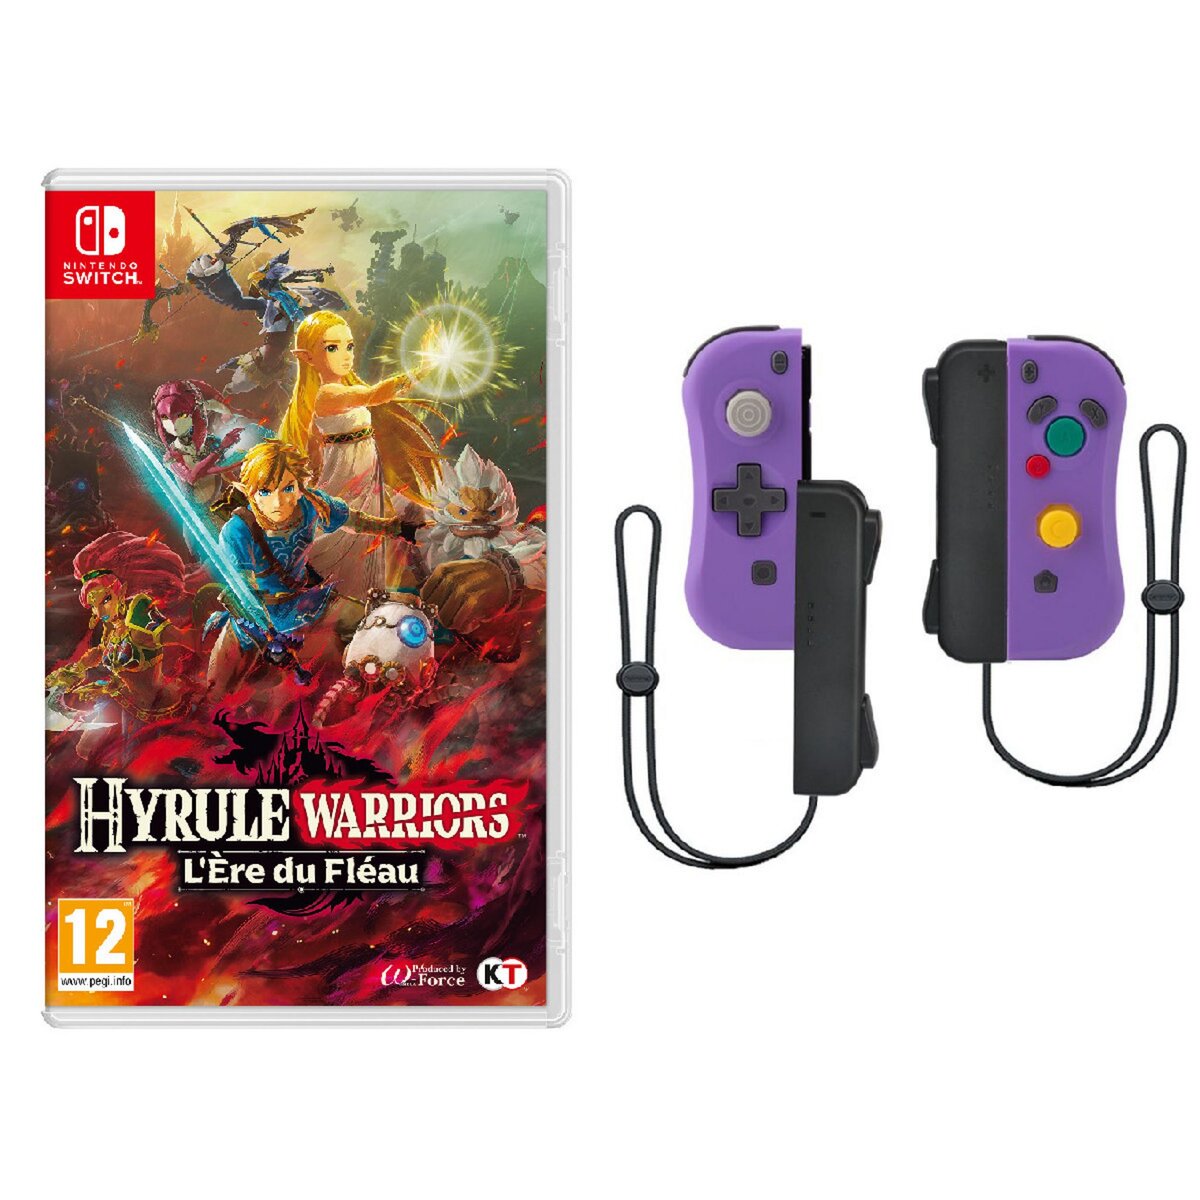 NINTENDO EXCLU WEB Manette iiCon Violet + Hyrule Warriors Nintendo Switch